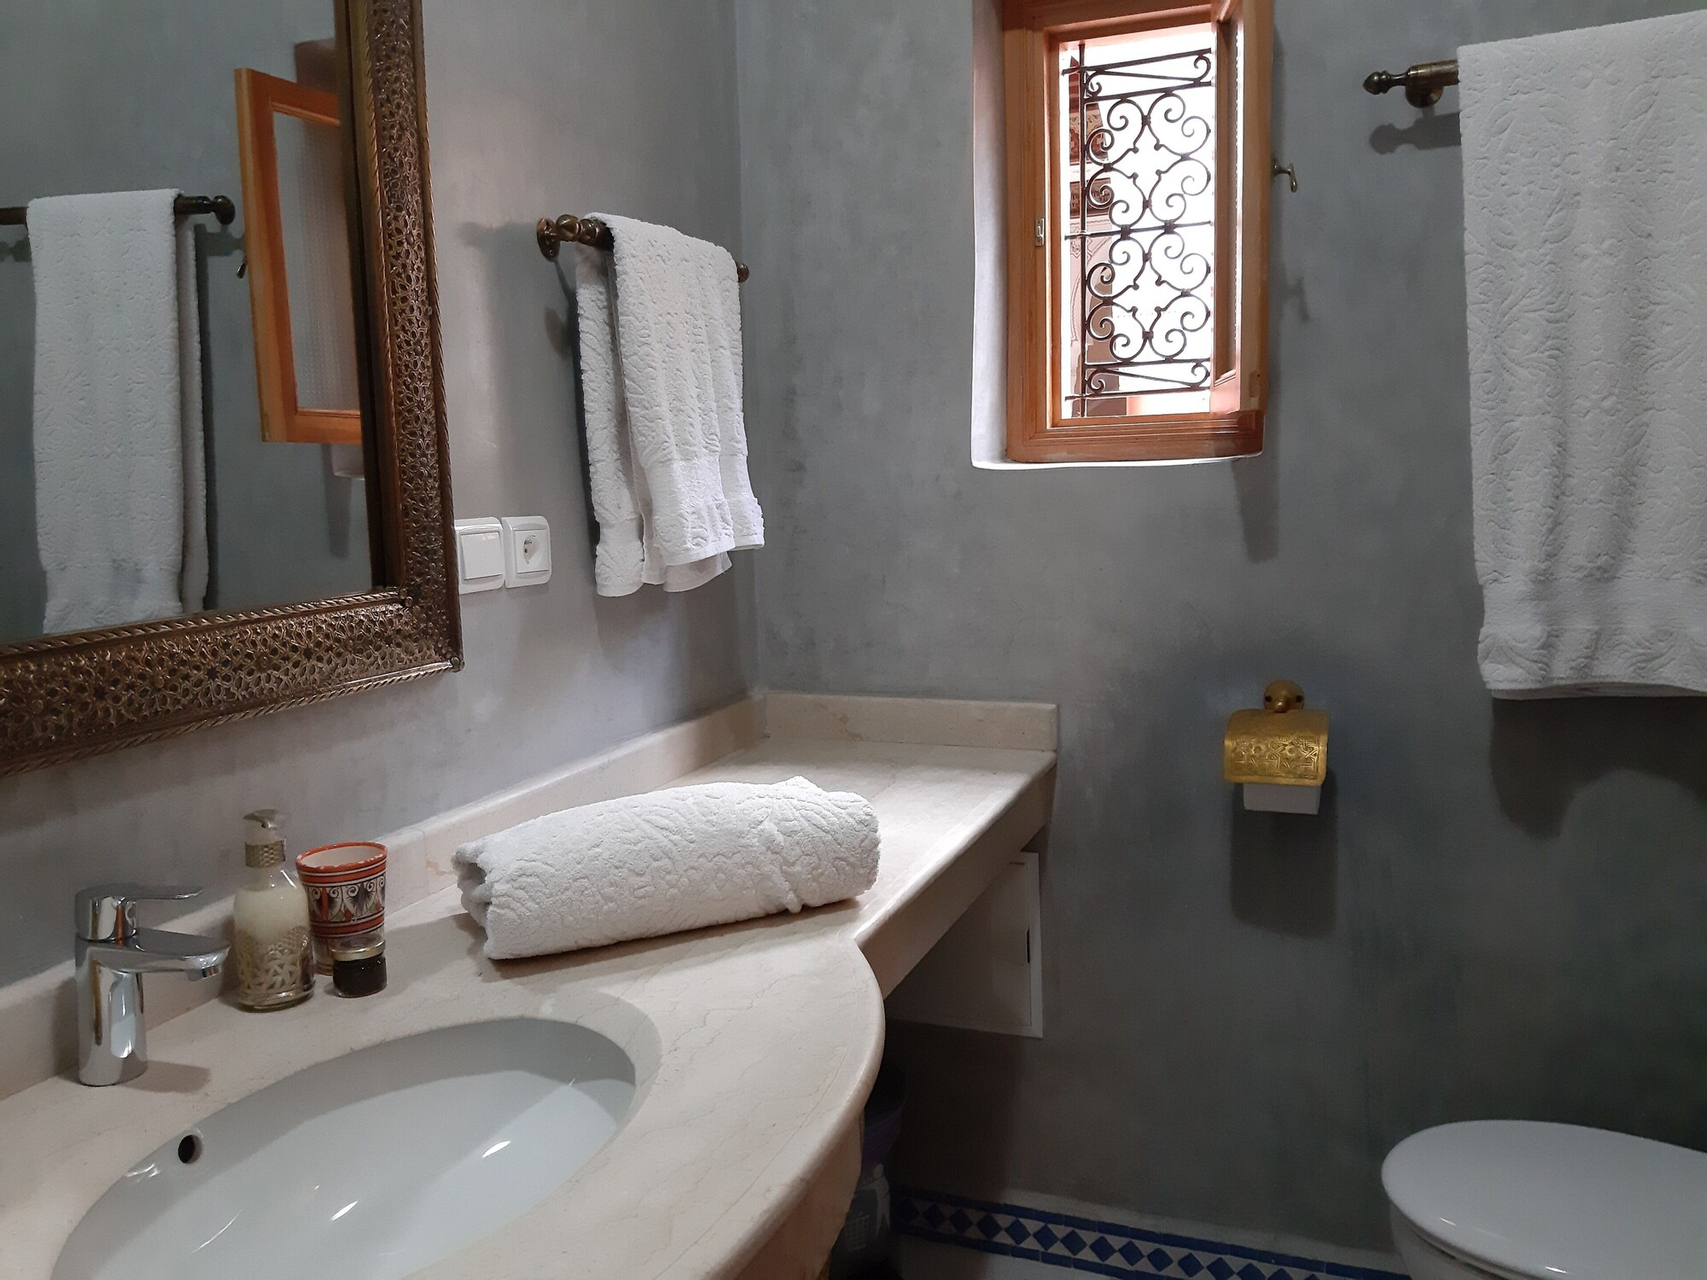 Bedroom 4, Riad Miral, Marrakech